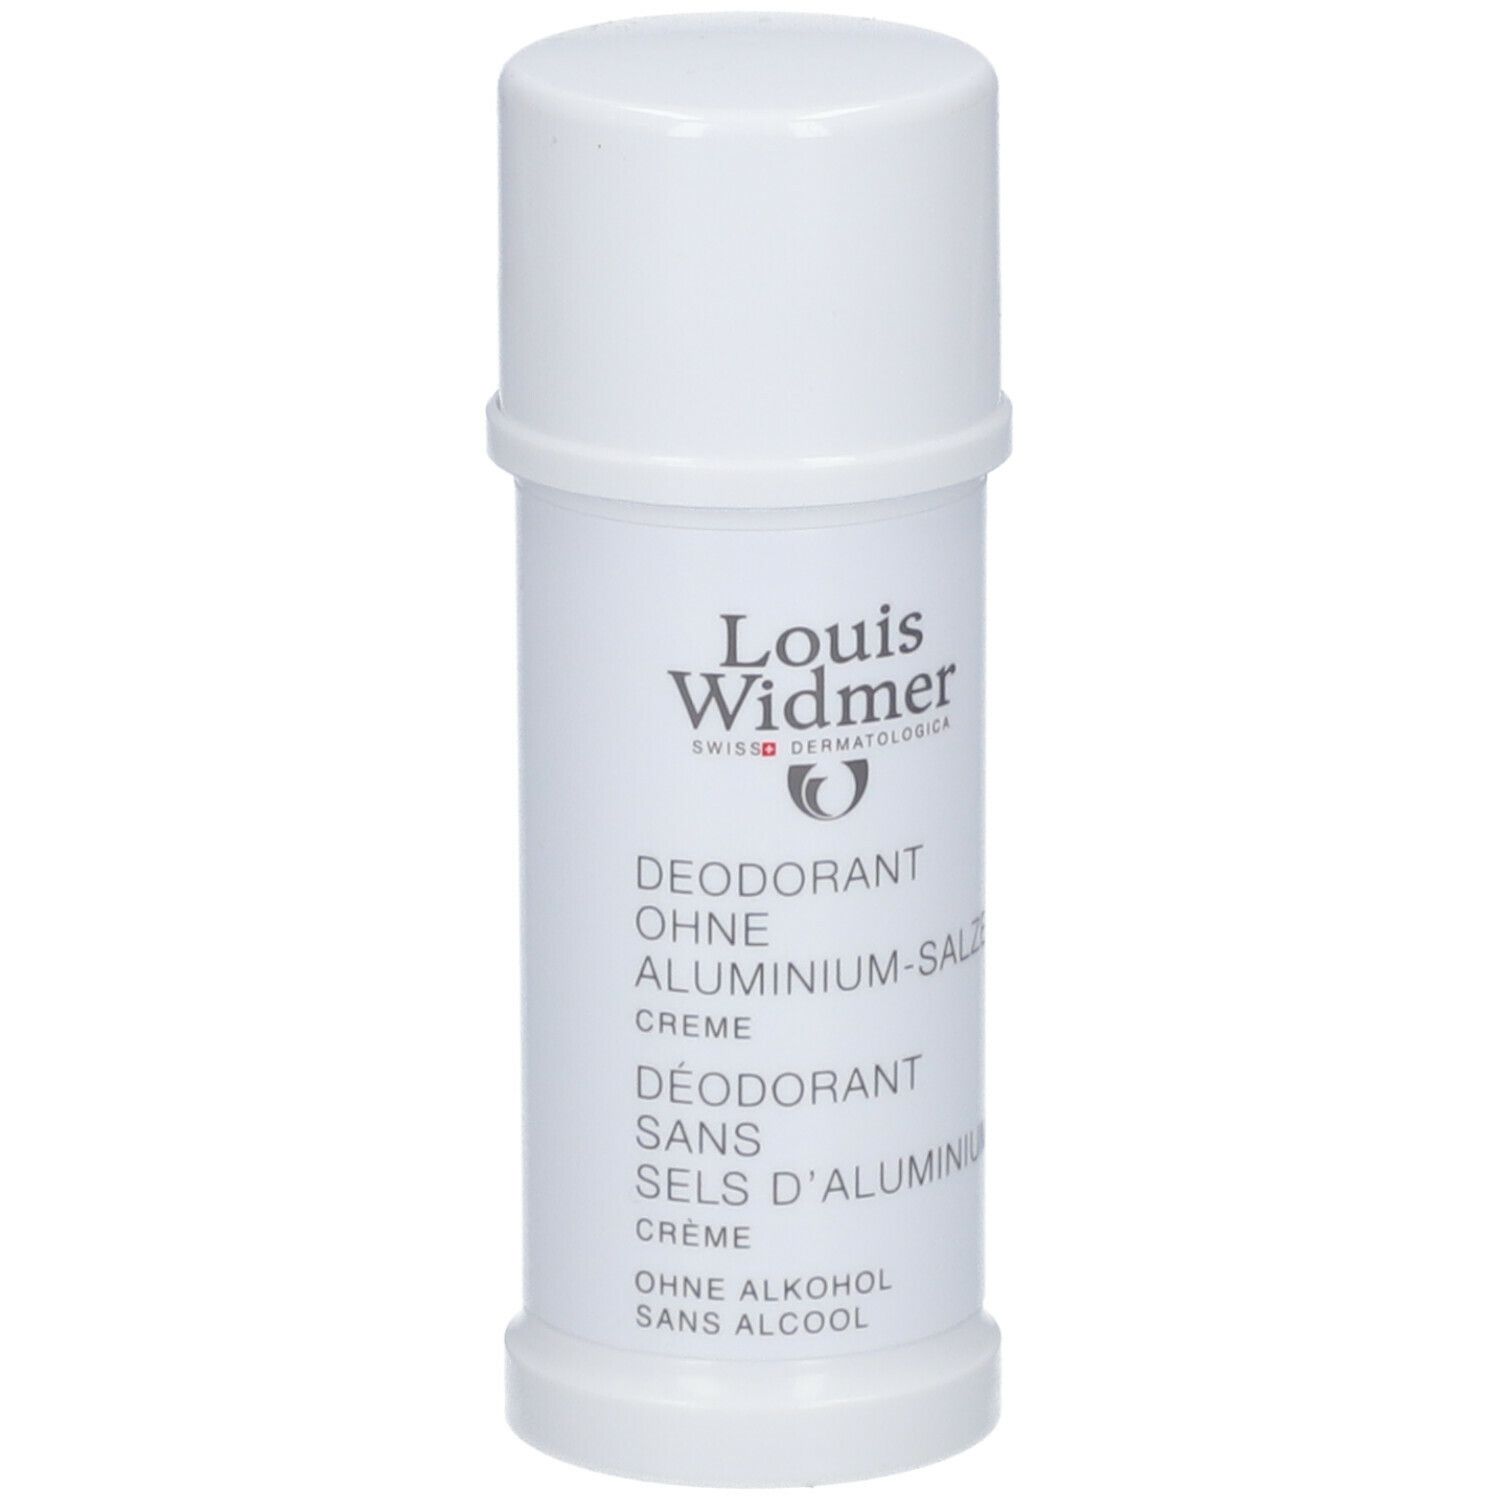 Louis Widmer Deodorant ohne Aluminiumsalze Creme